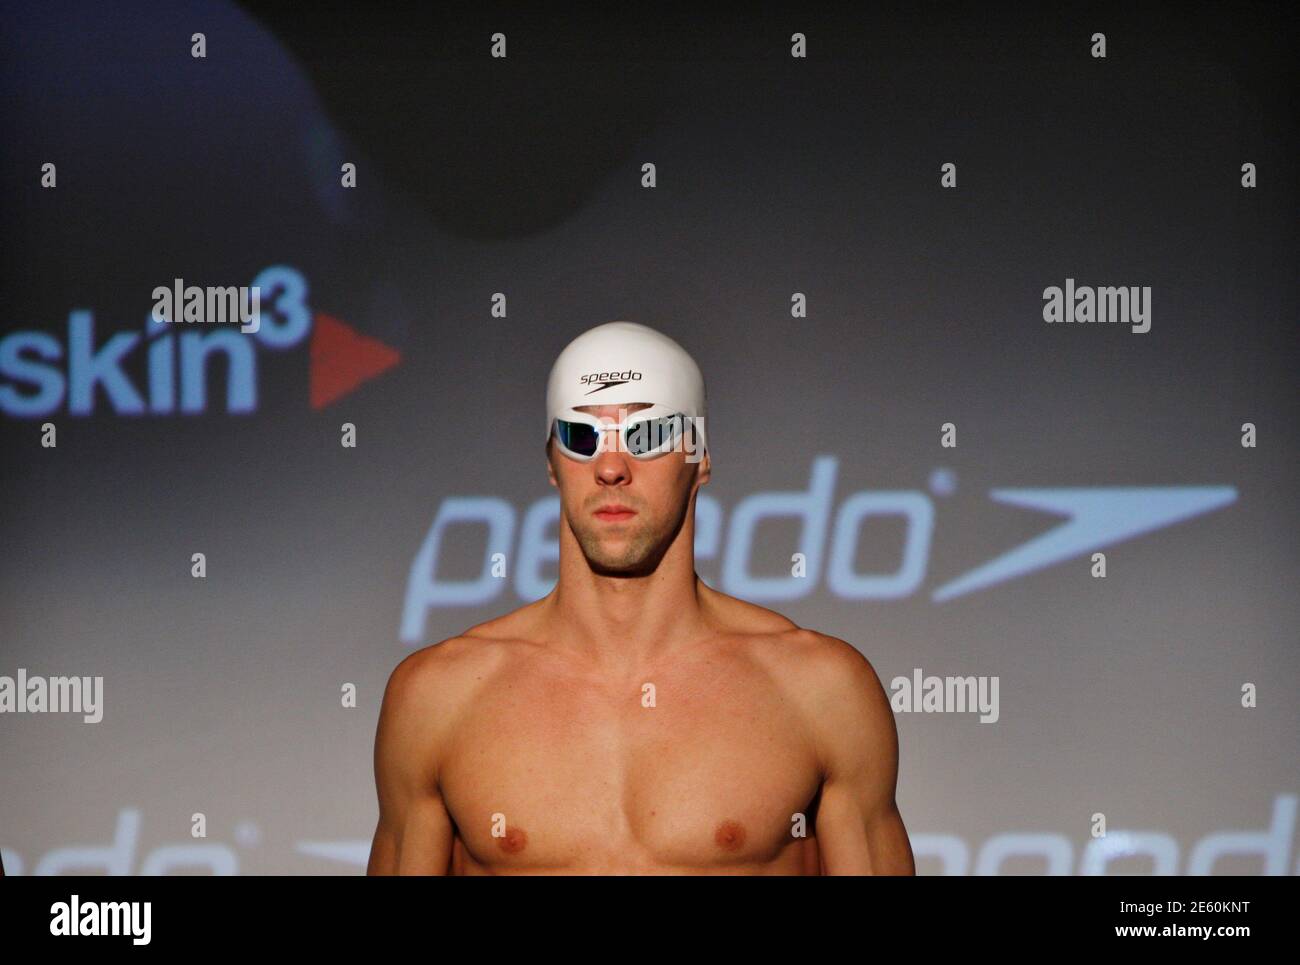 U.S. Olympic gold medallist swimmer Michael Phelps models the new Speedo  brand swimsuits 